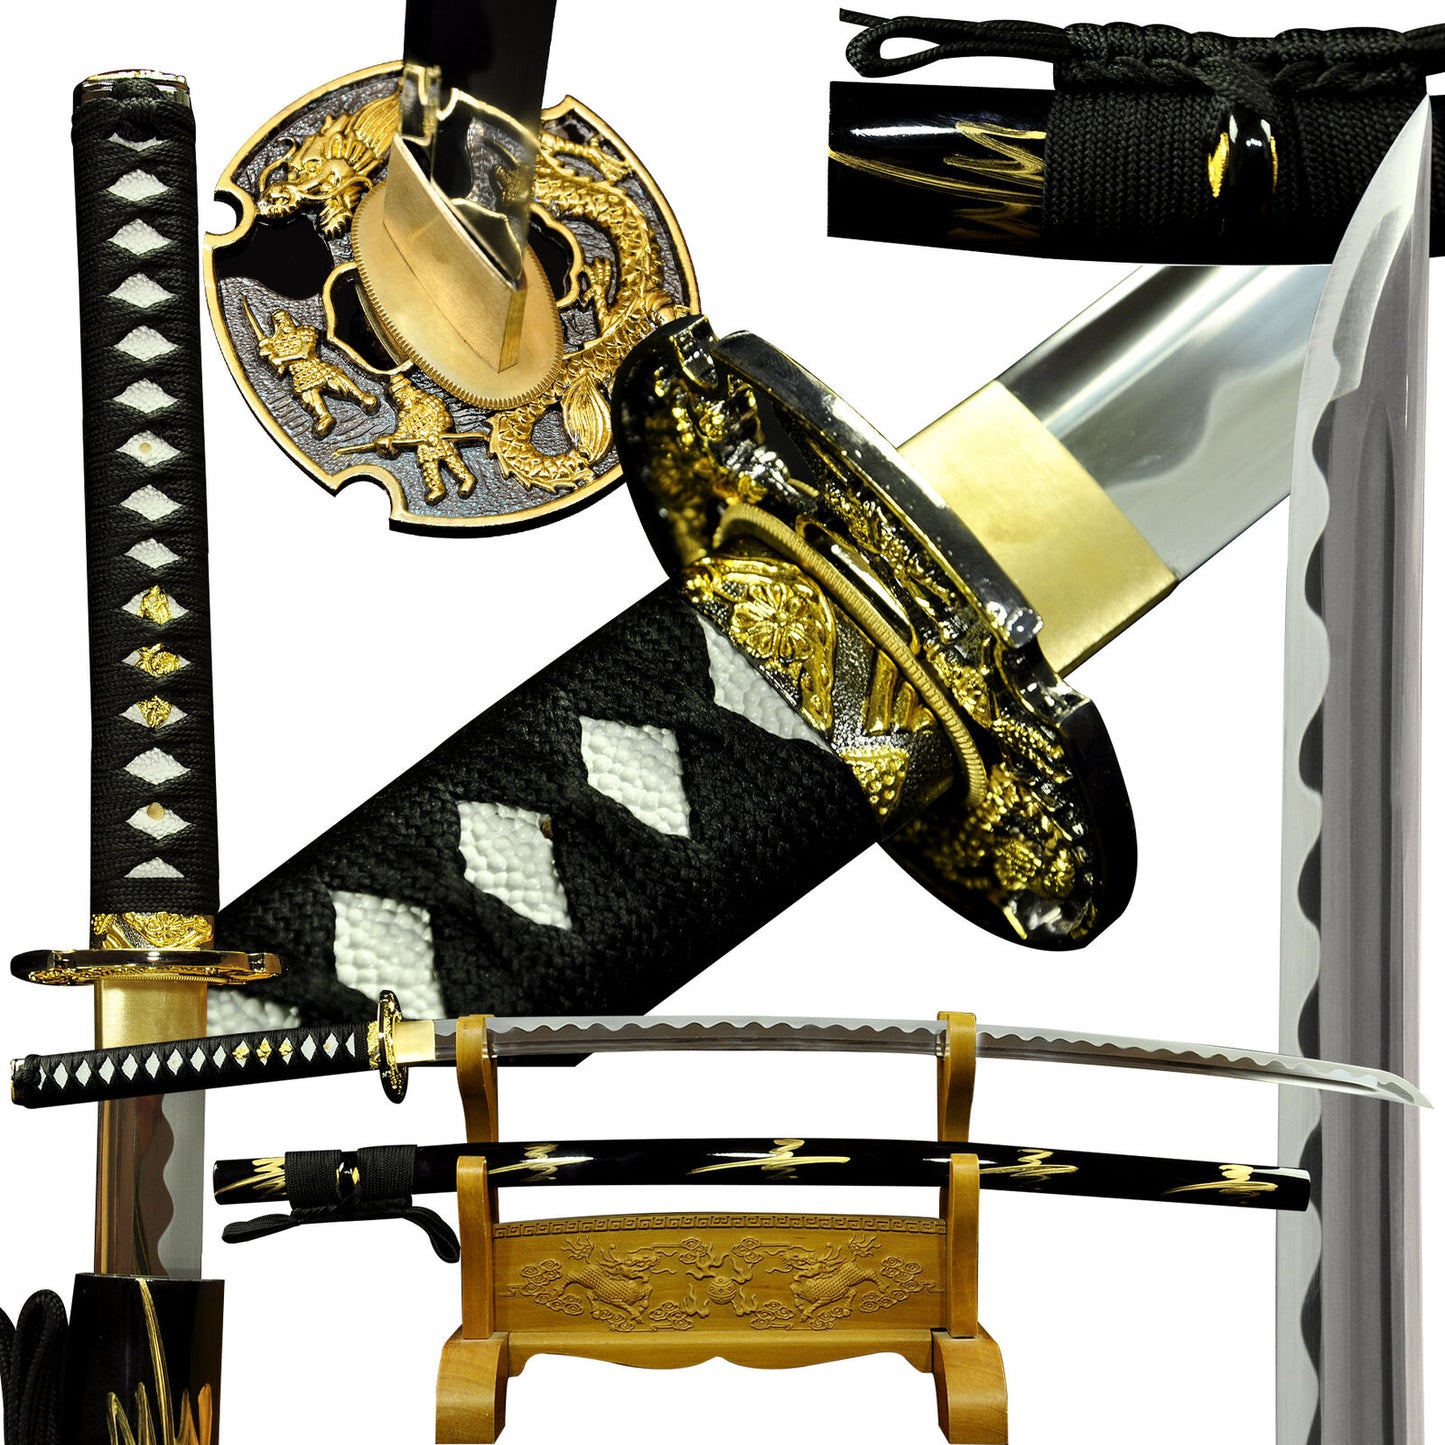 Full Tang Japanese Katana Samurai Dragon Sword Razor Sharp Battle Ready